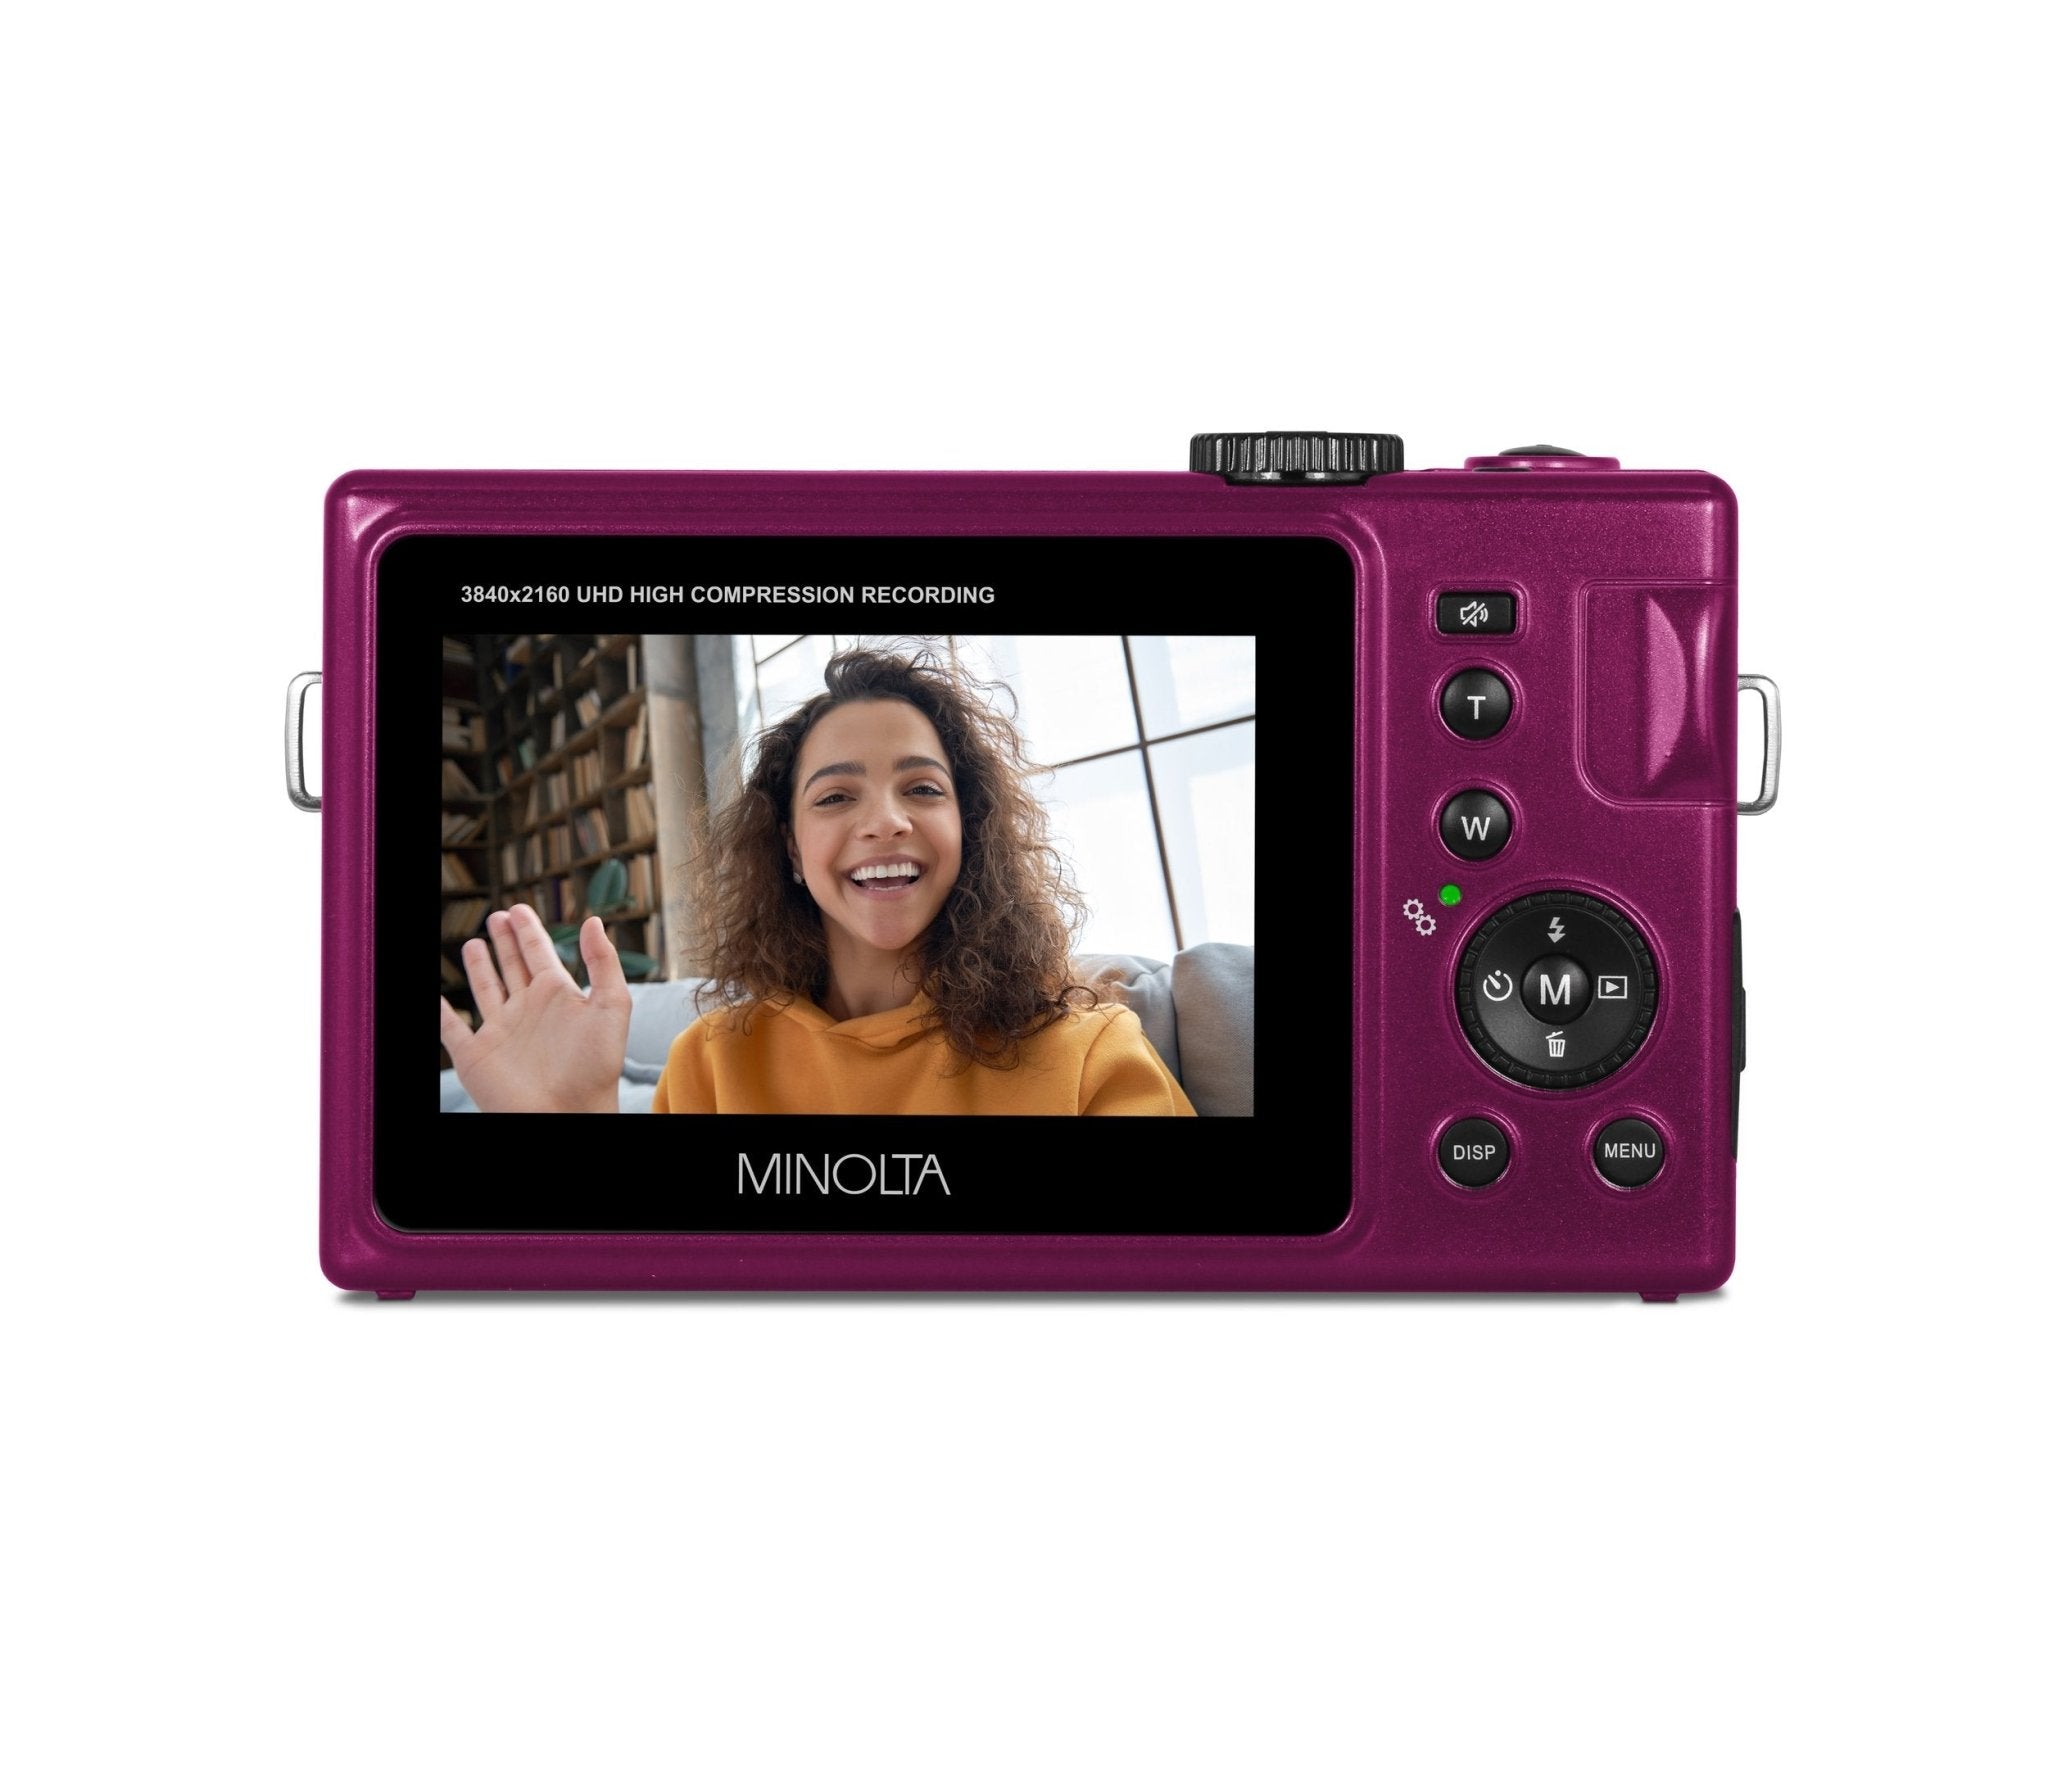 MINOLTA MND25 48 MP Autofocus / 4K Ultra HD Camera w/Selfie Mirror (Magenta) - B&C Camera